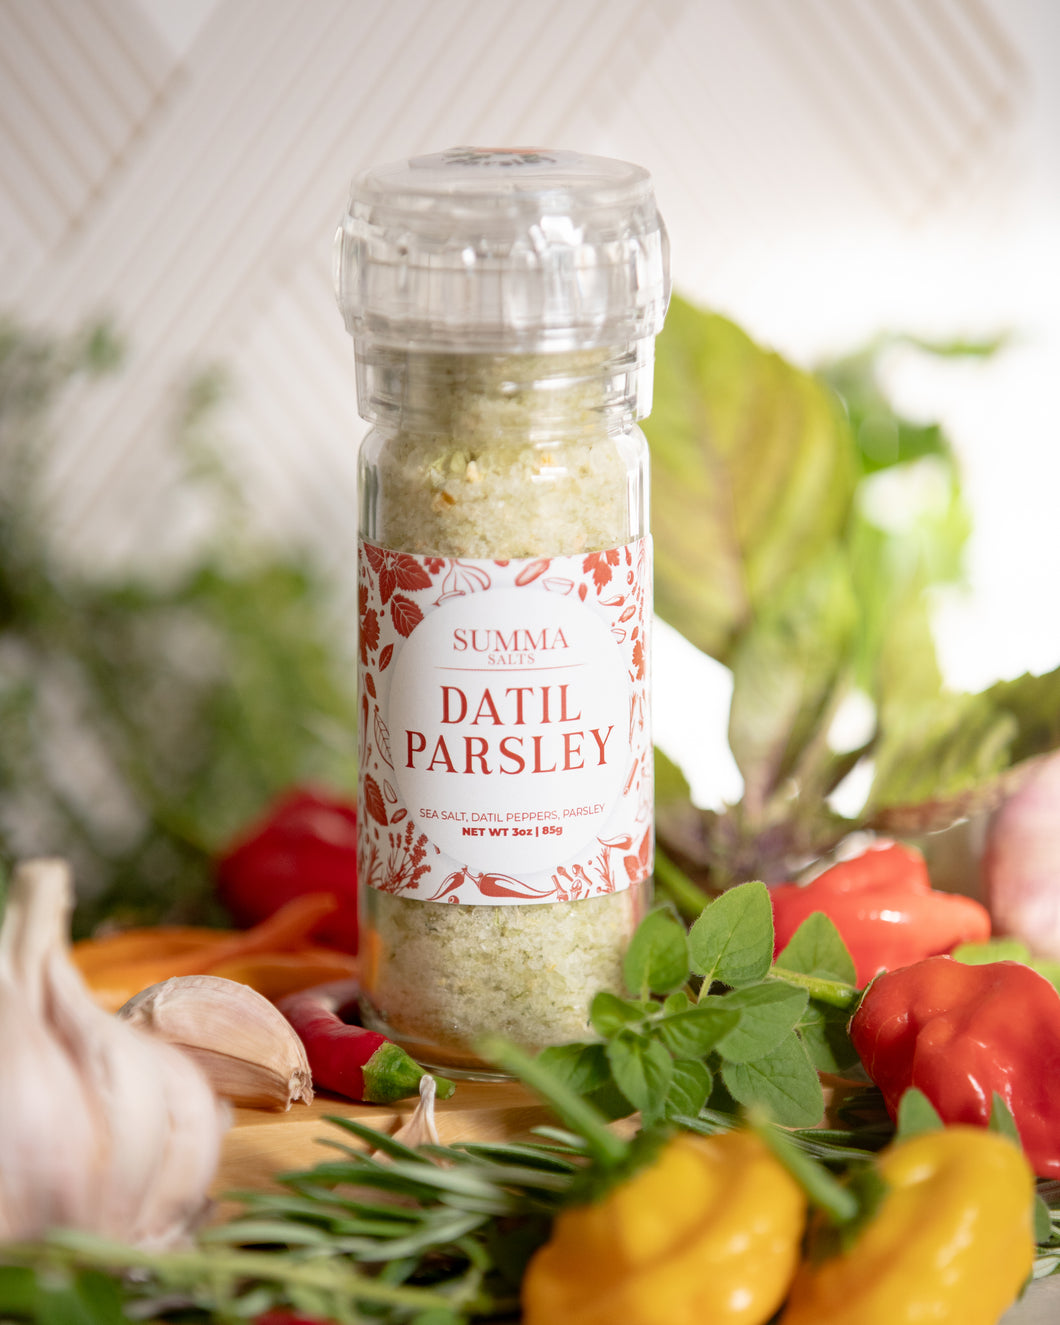 Datil Parsley - A taste of St Augustine, FL!